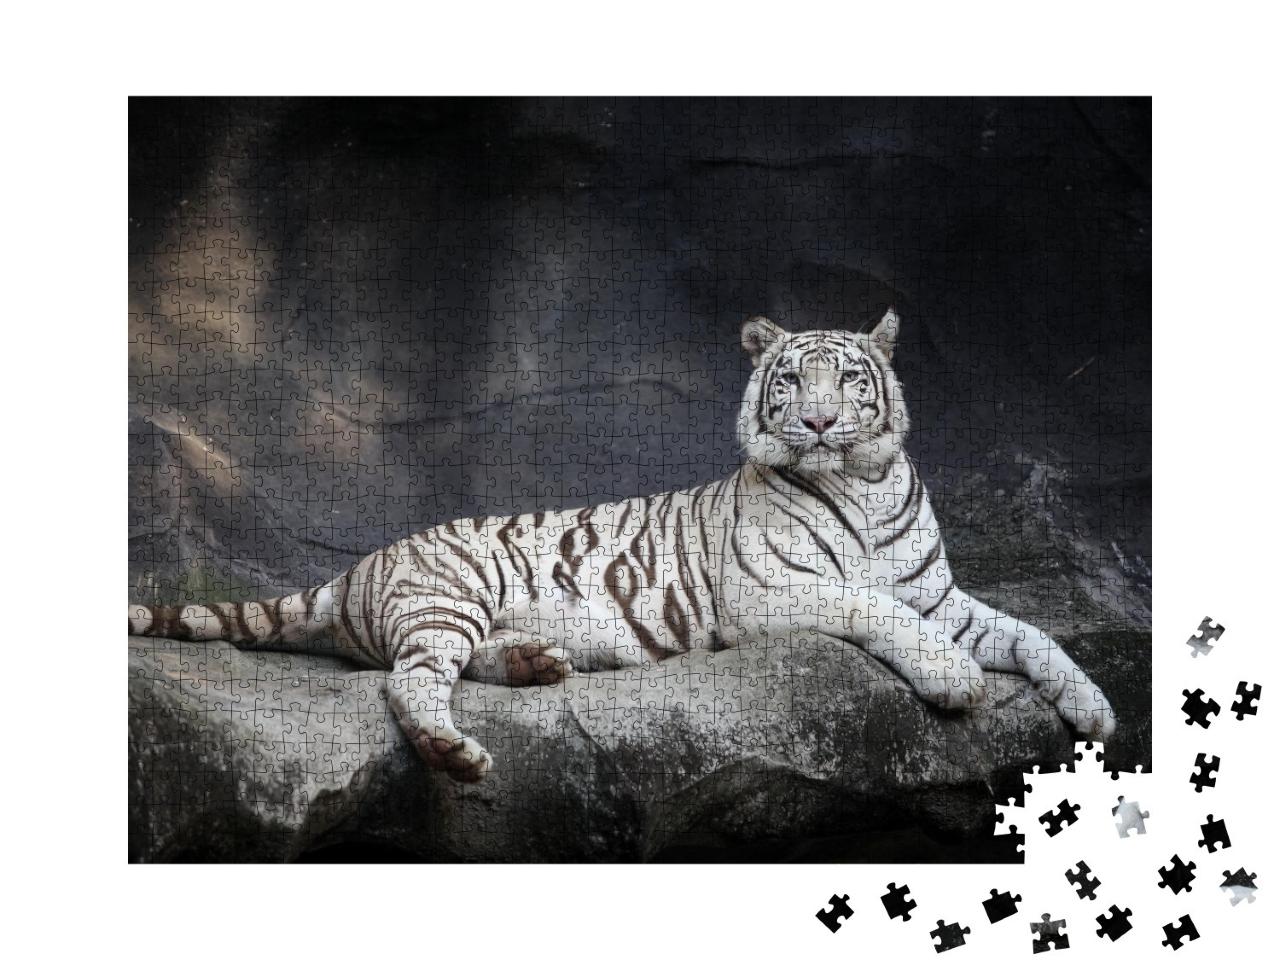 Puzzle de 1000 pièces « Tigre blanc »